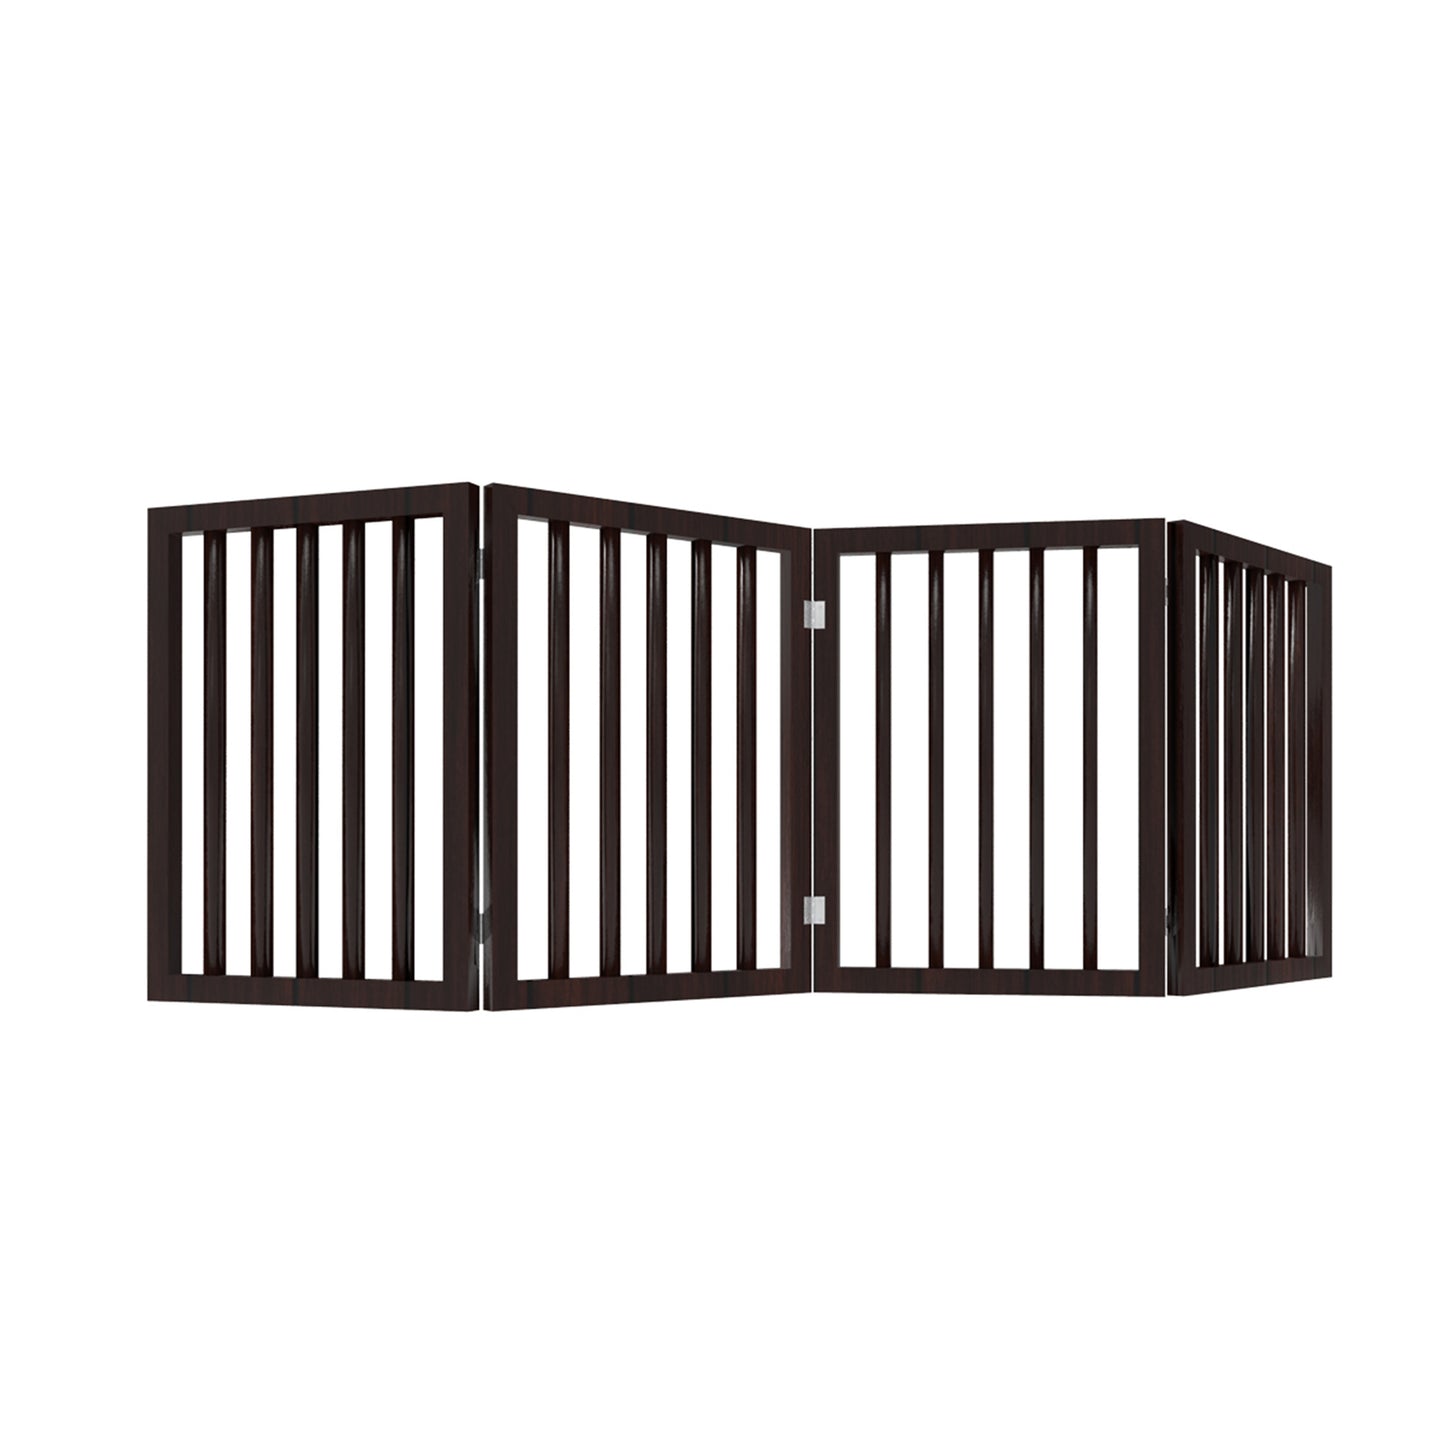 PETMAKER 4-Panel Indoor Foldable Pet Gate, Brown